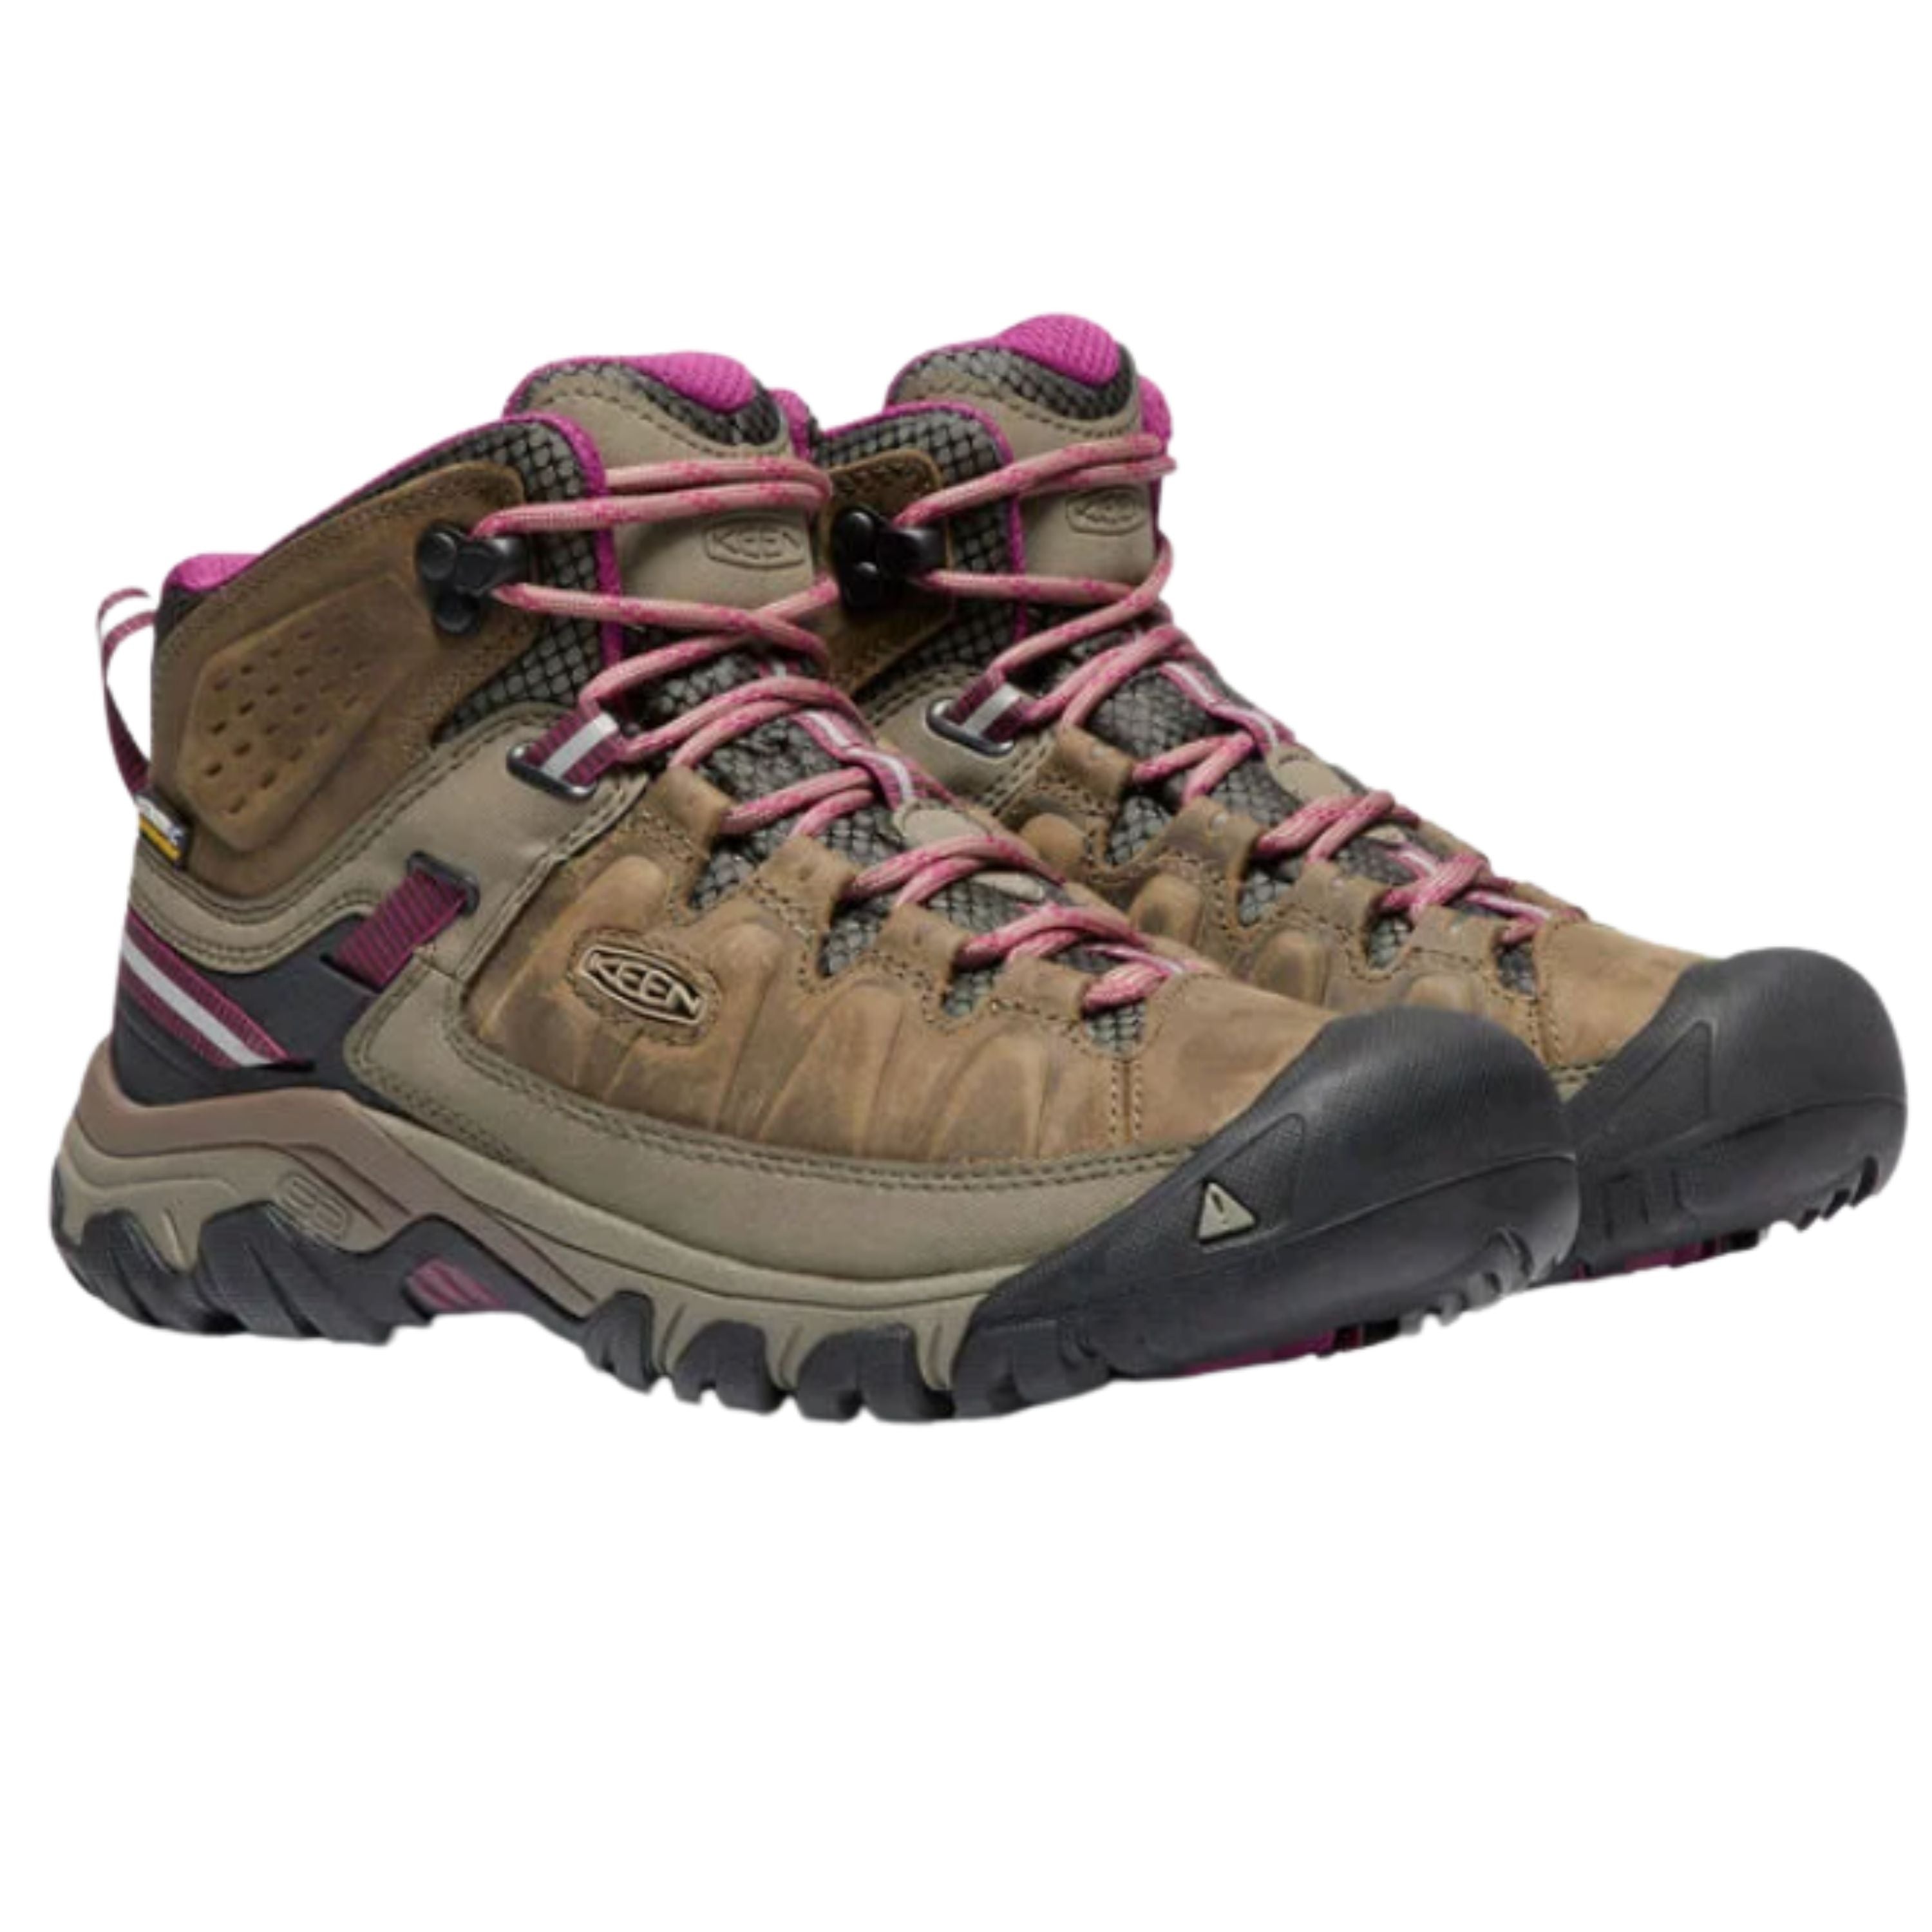 "Targhee III Mid WP" hiking boots - Women's